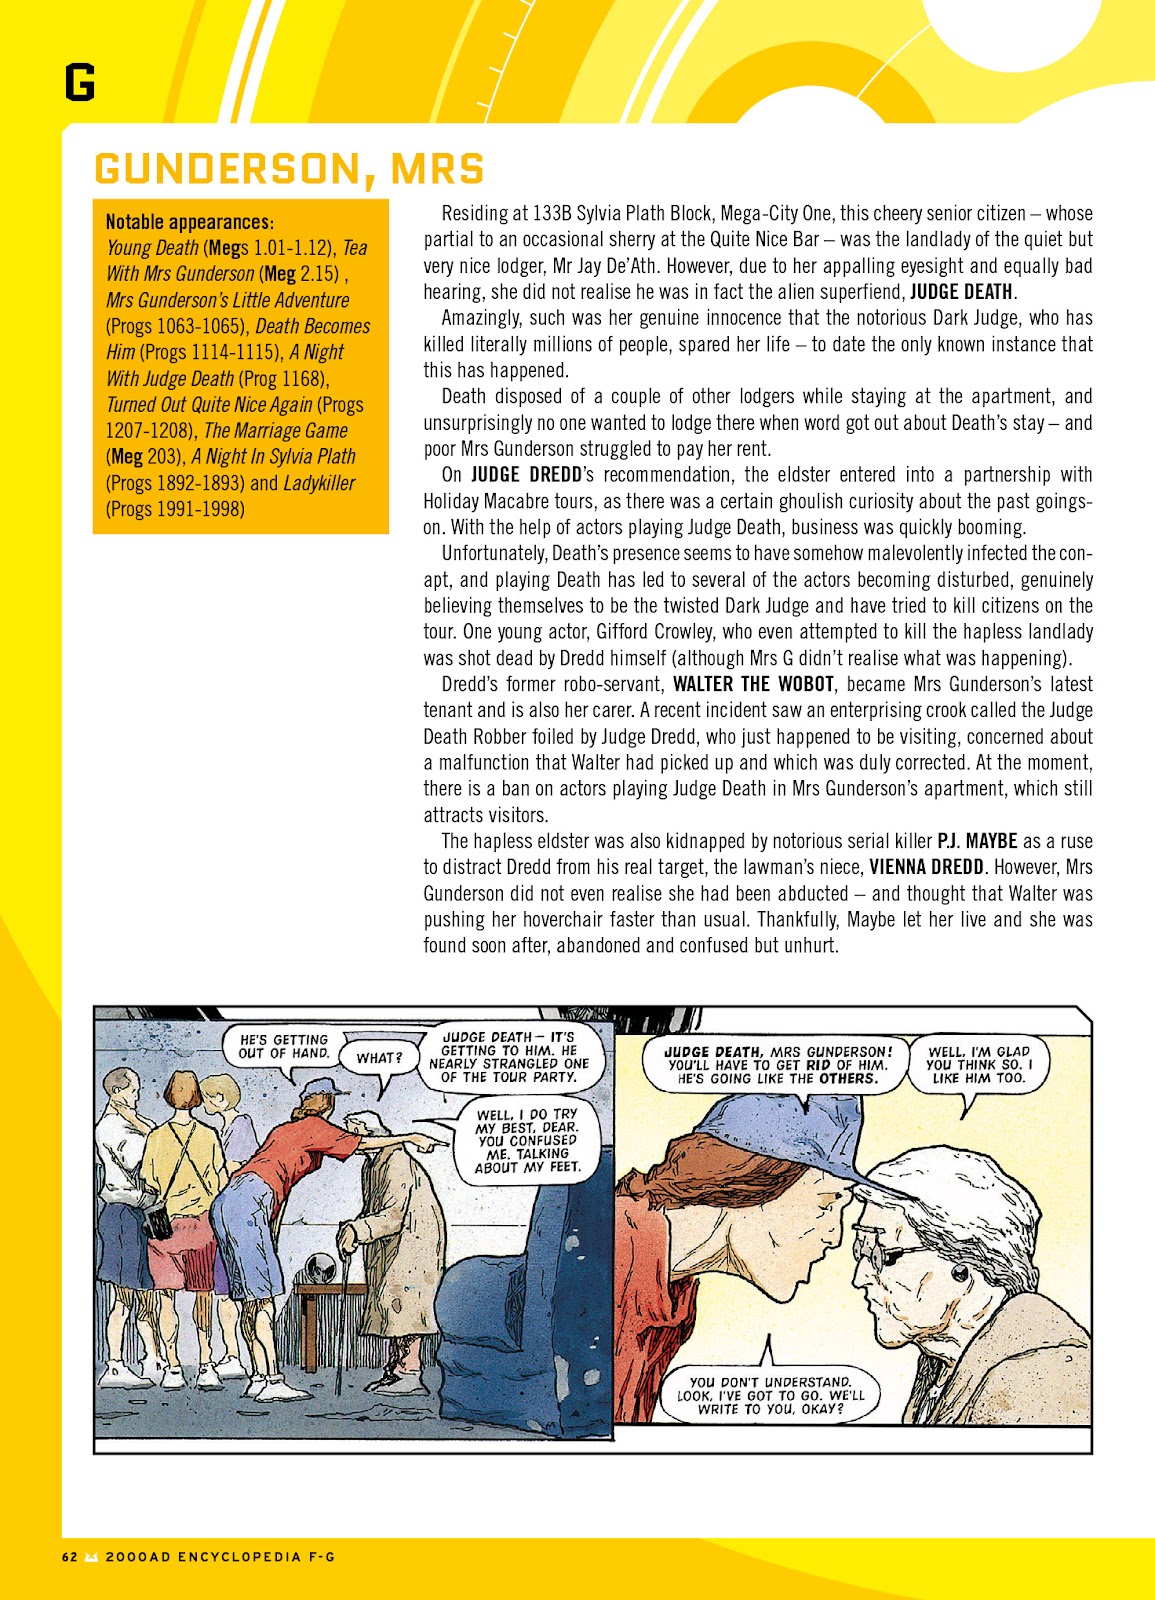 Judge Dredd Megazine (Vol. 5) issue 428 - Page 128